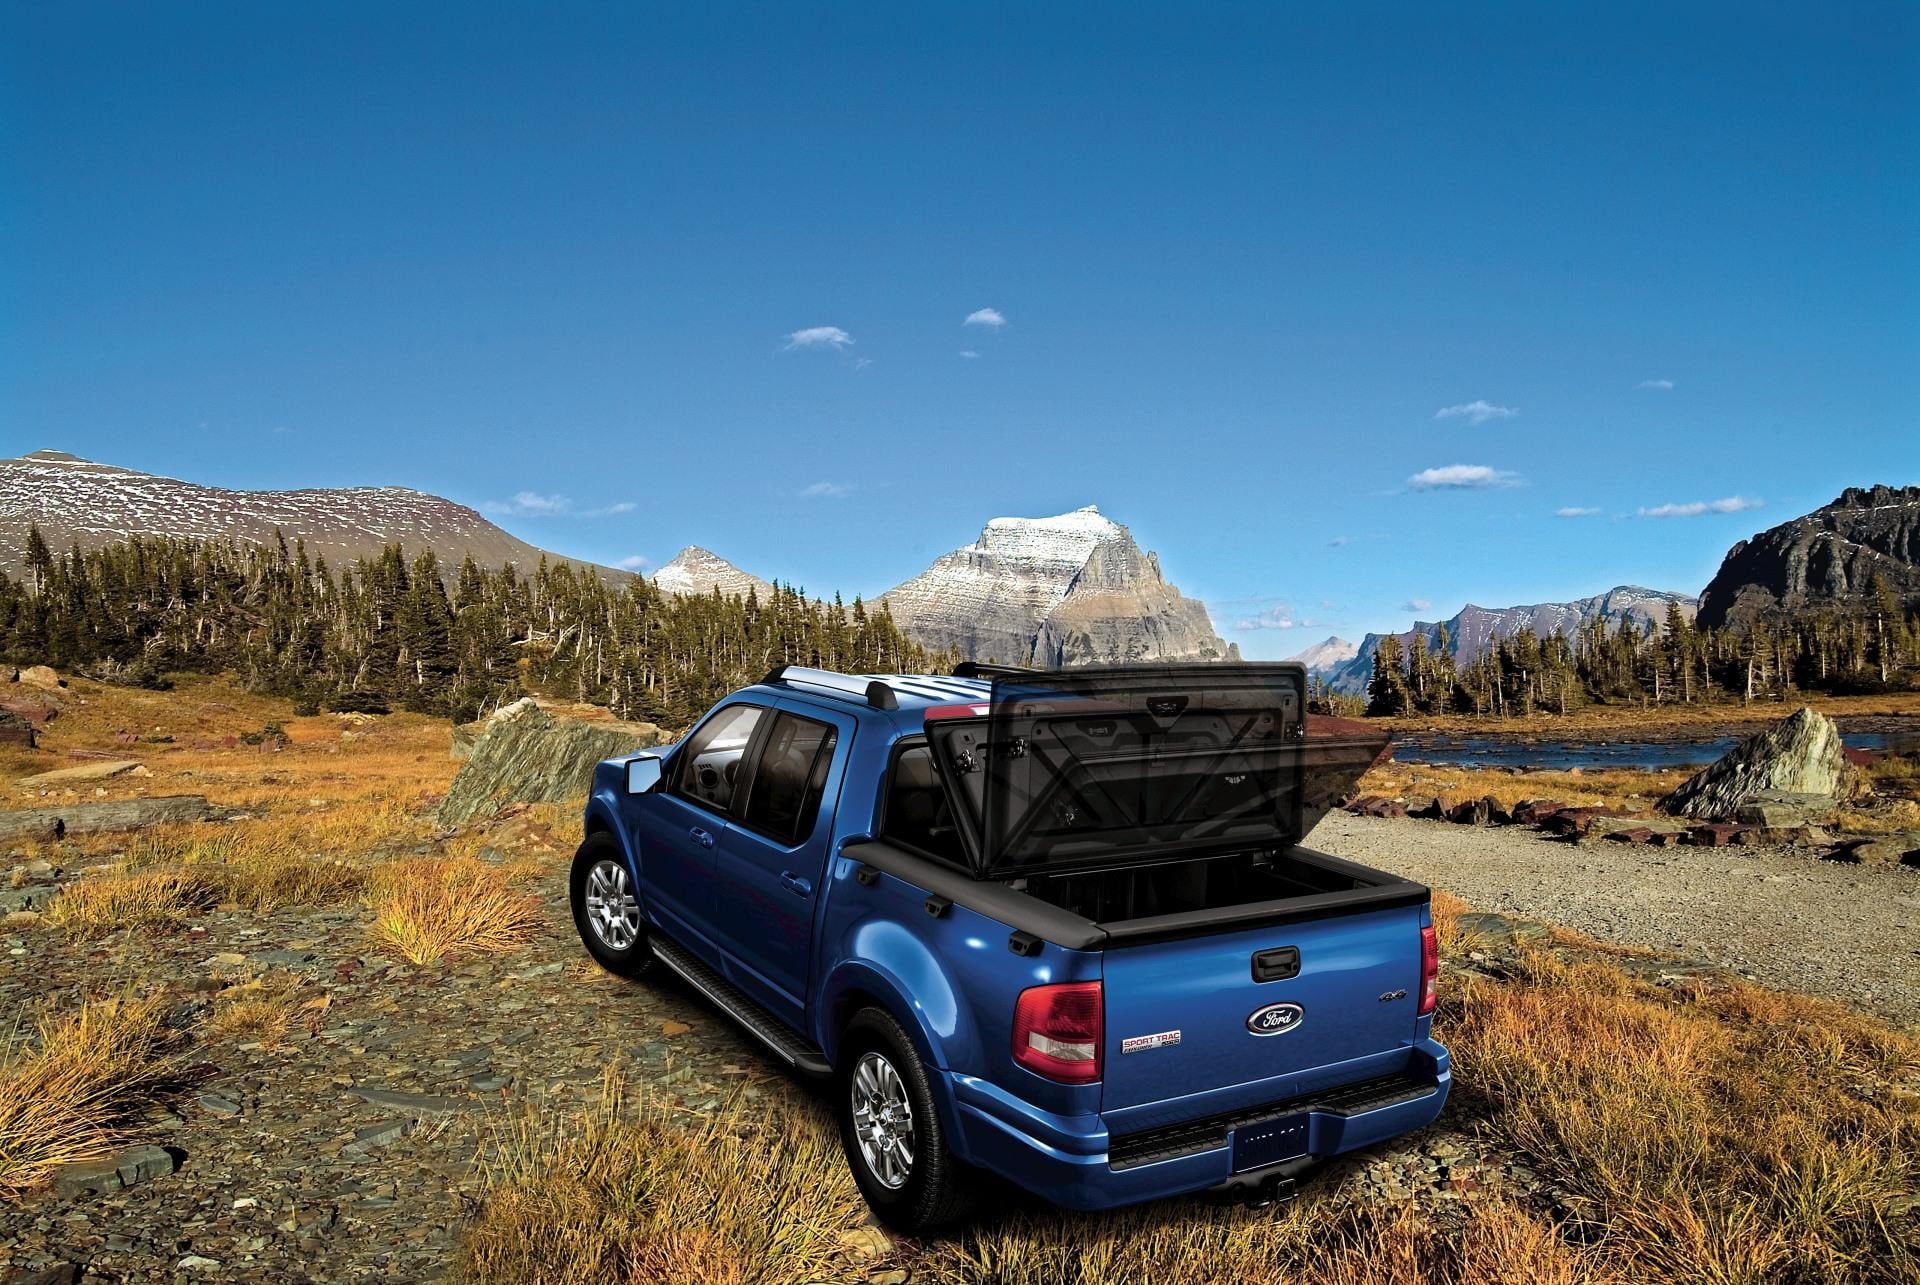 2010 ford explorer sport trac, car, blue, mountain, sky, land vehicle